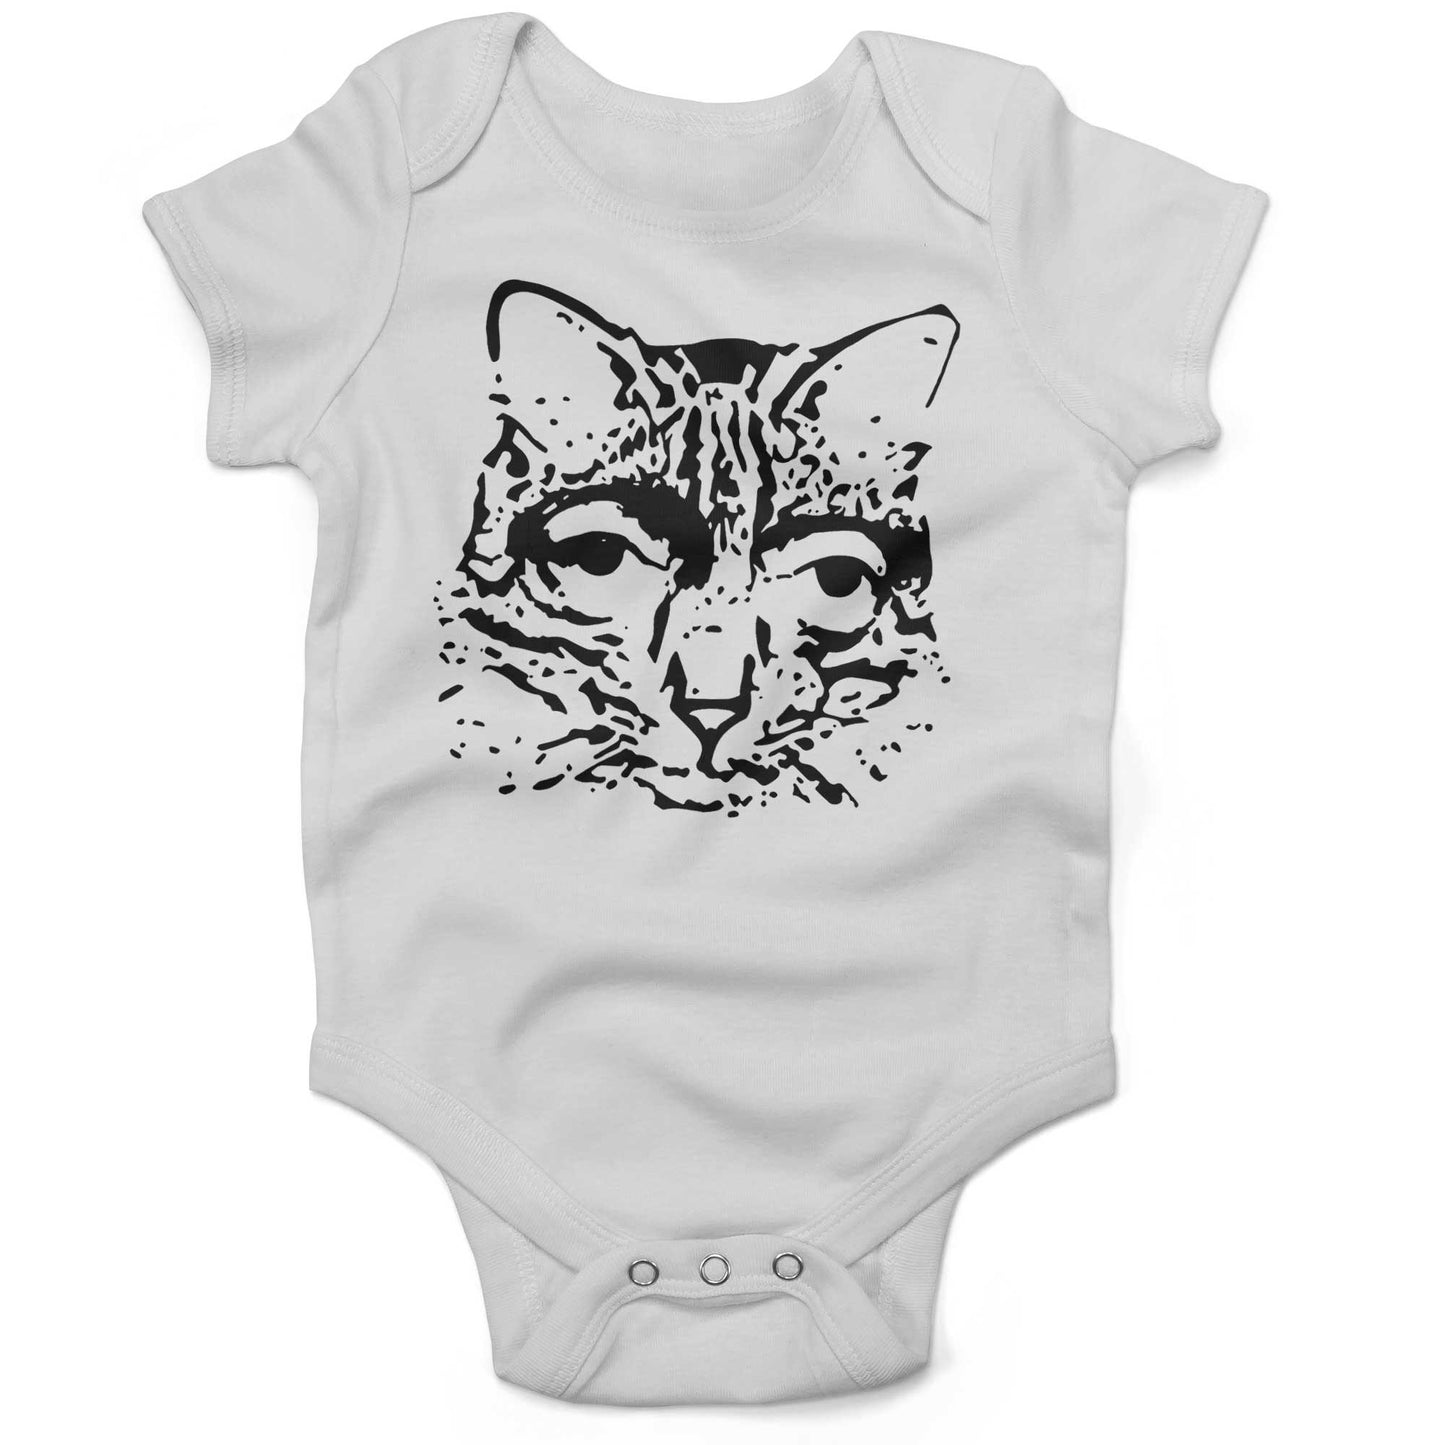 Catscemi Infant Bodysuit or Raglan Baby Tee-White-3-6 months